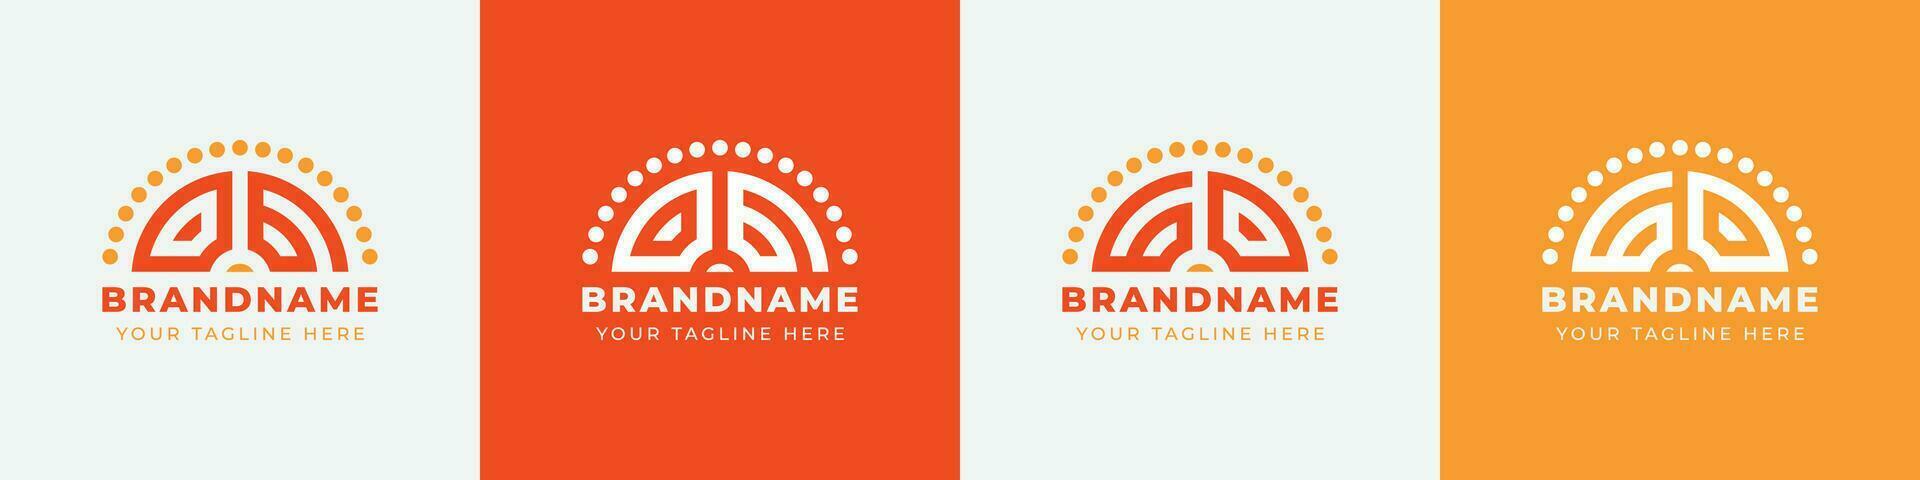 Letter GO and OG Sunrise  Logo Set, suitable for any business with GO or OG initials. vector